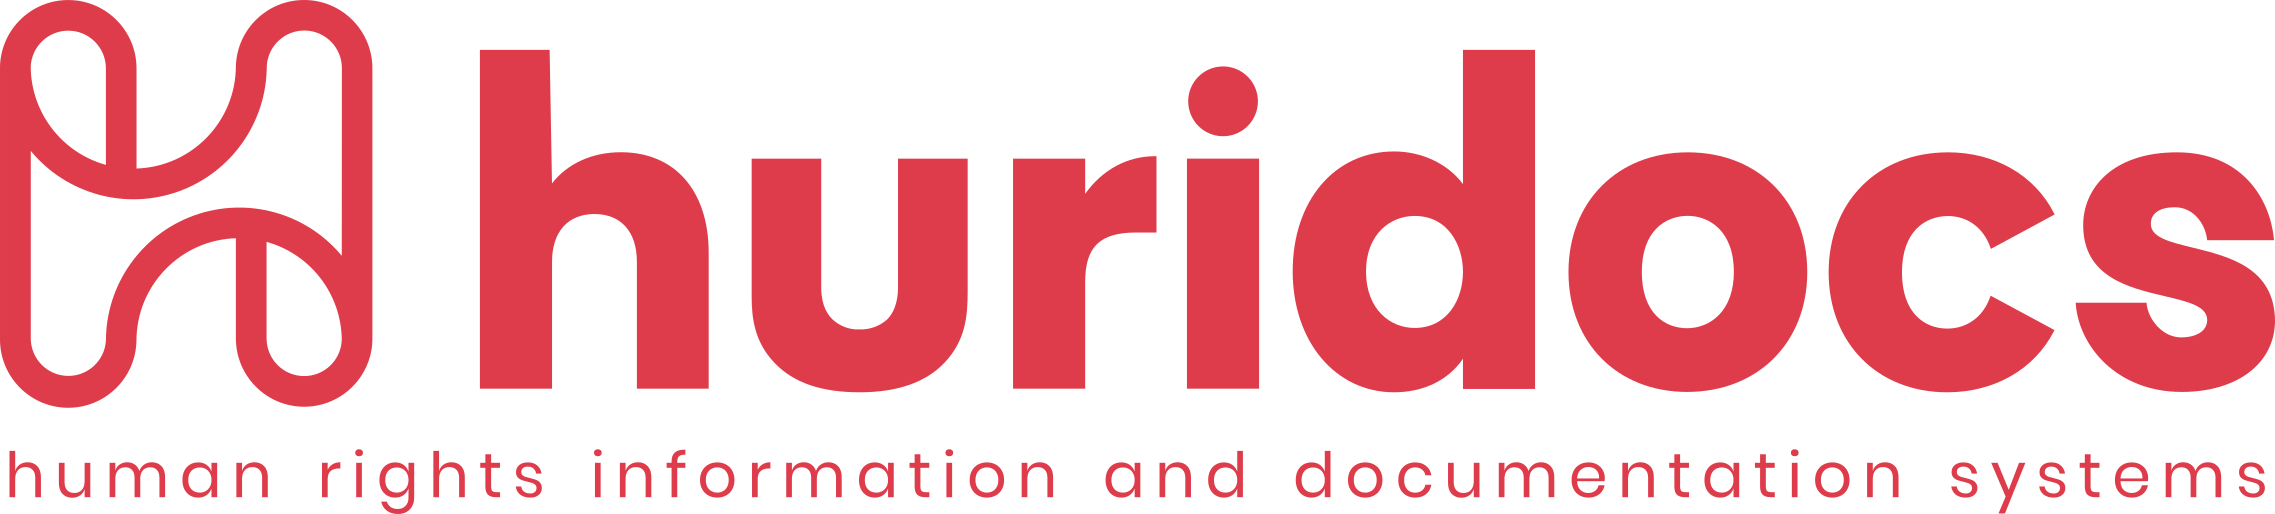 HURIDOCS logo